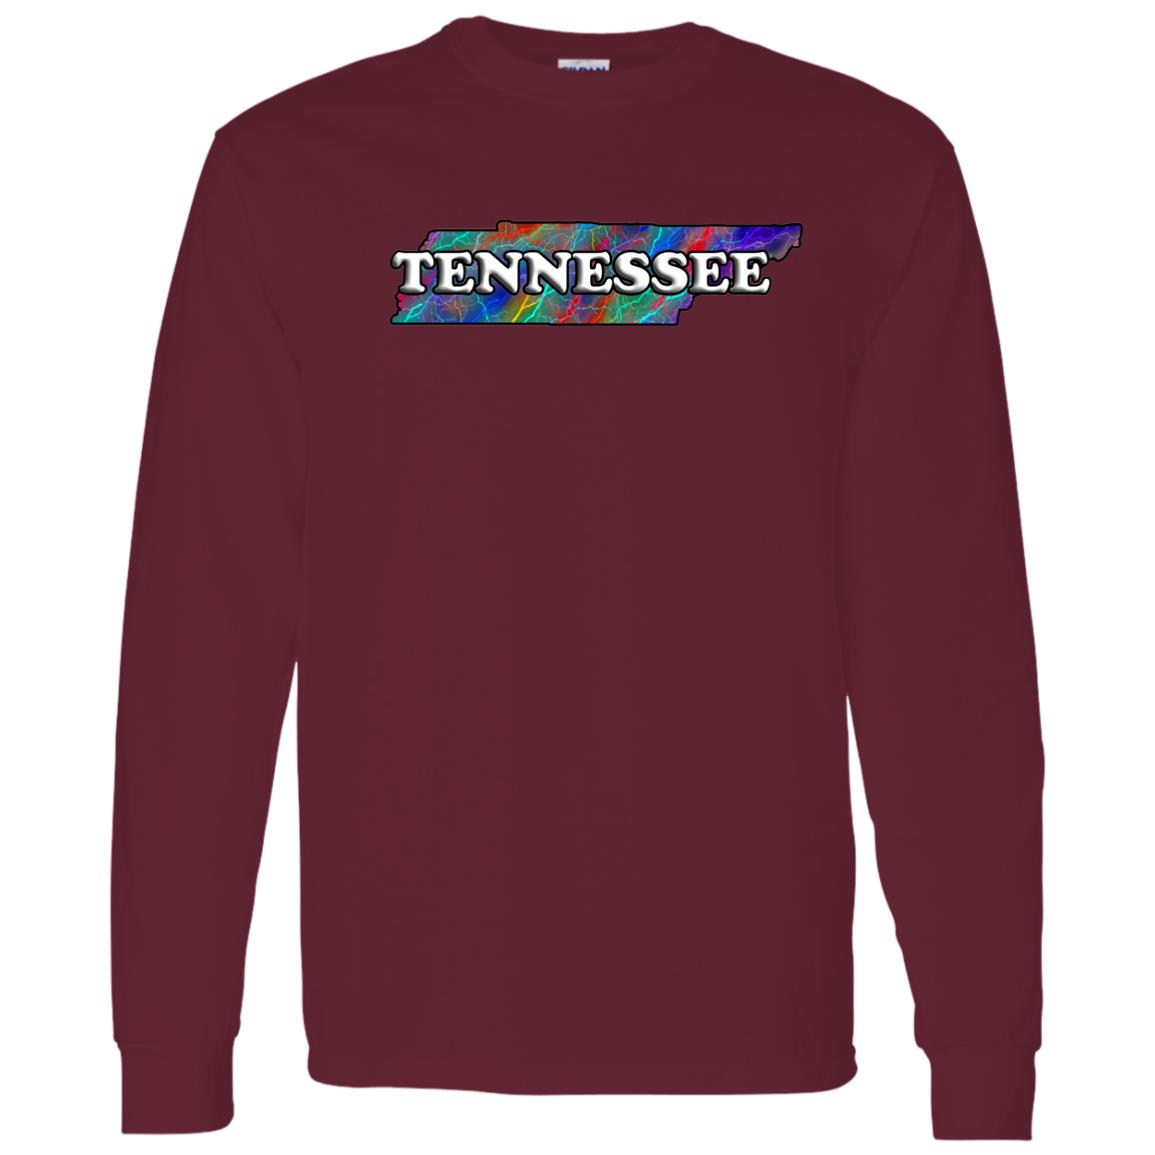 Tennessee Long Sleeve T-Shirt